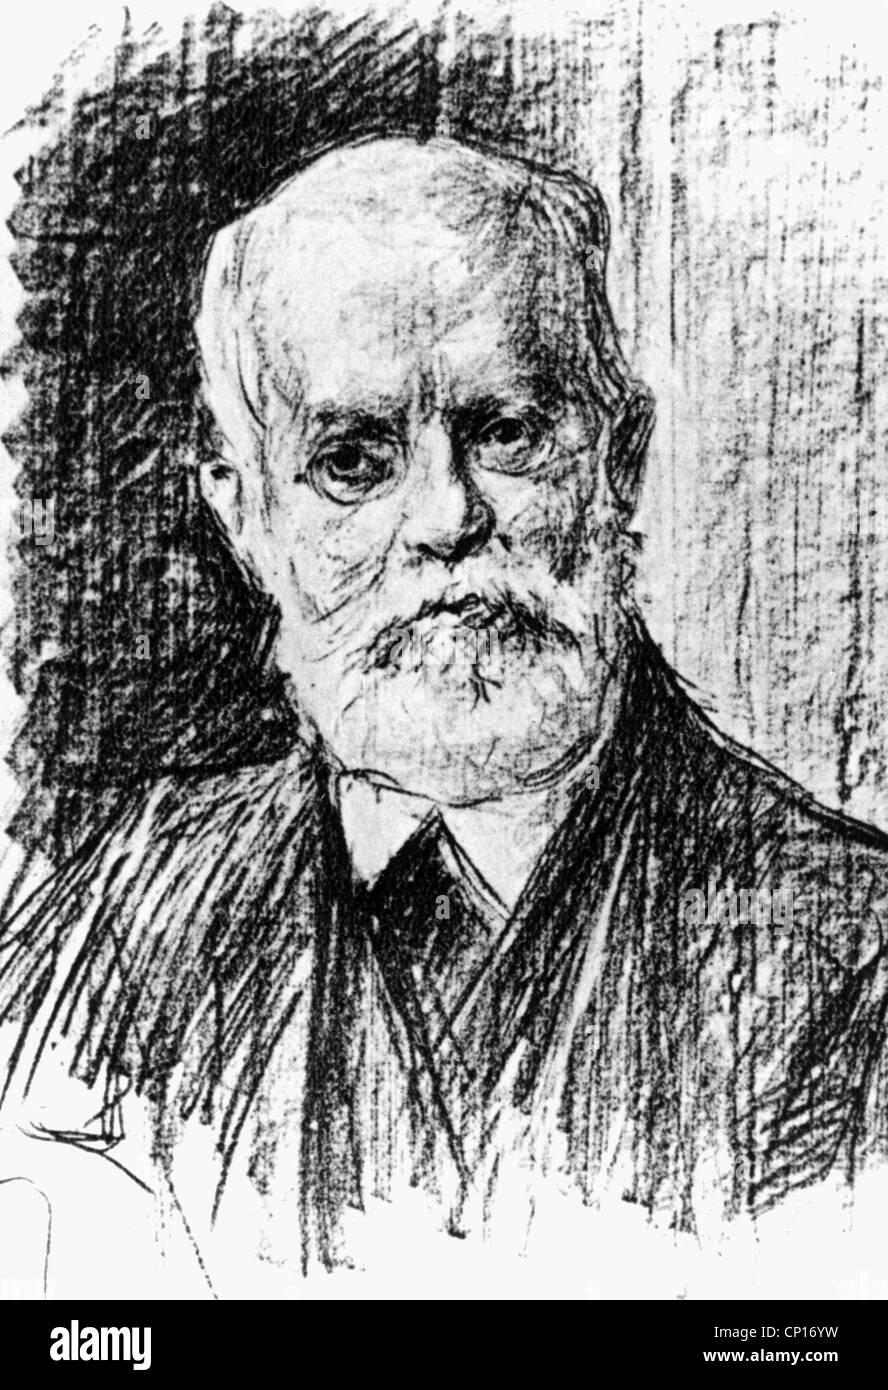 Kautsky, Karl, 16.10.1854 - 17.10.1938, Austrian politician (socialist), portrait, lithograph by Max Liebermann, 19th century, Stock Photo